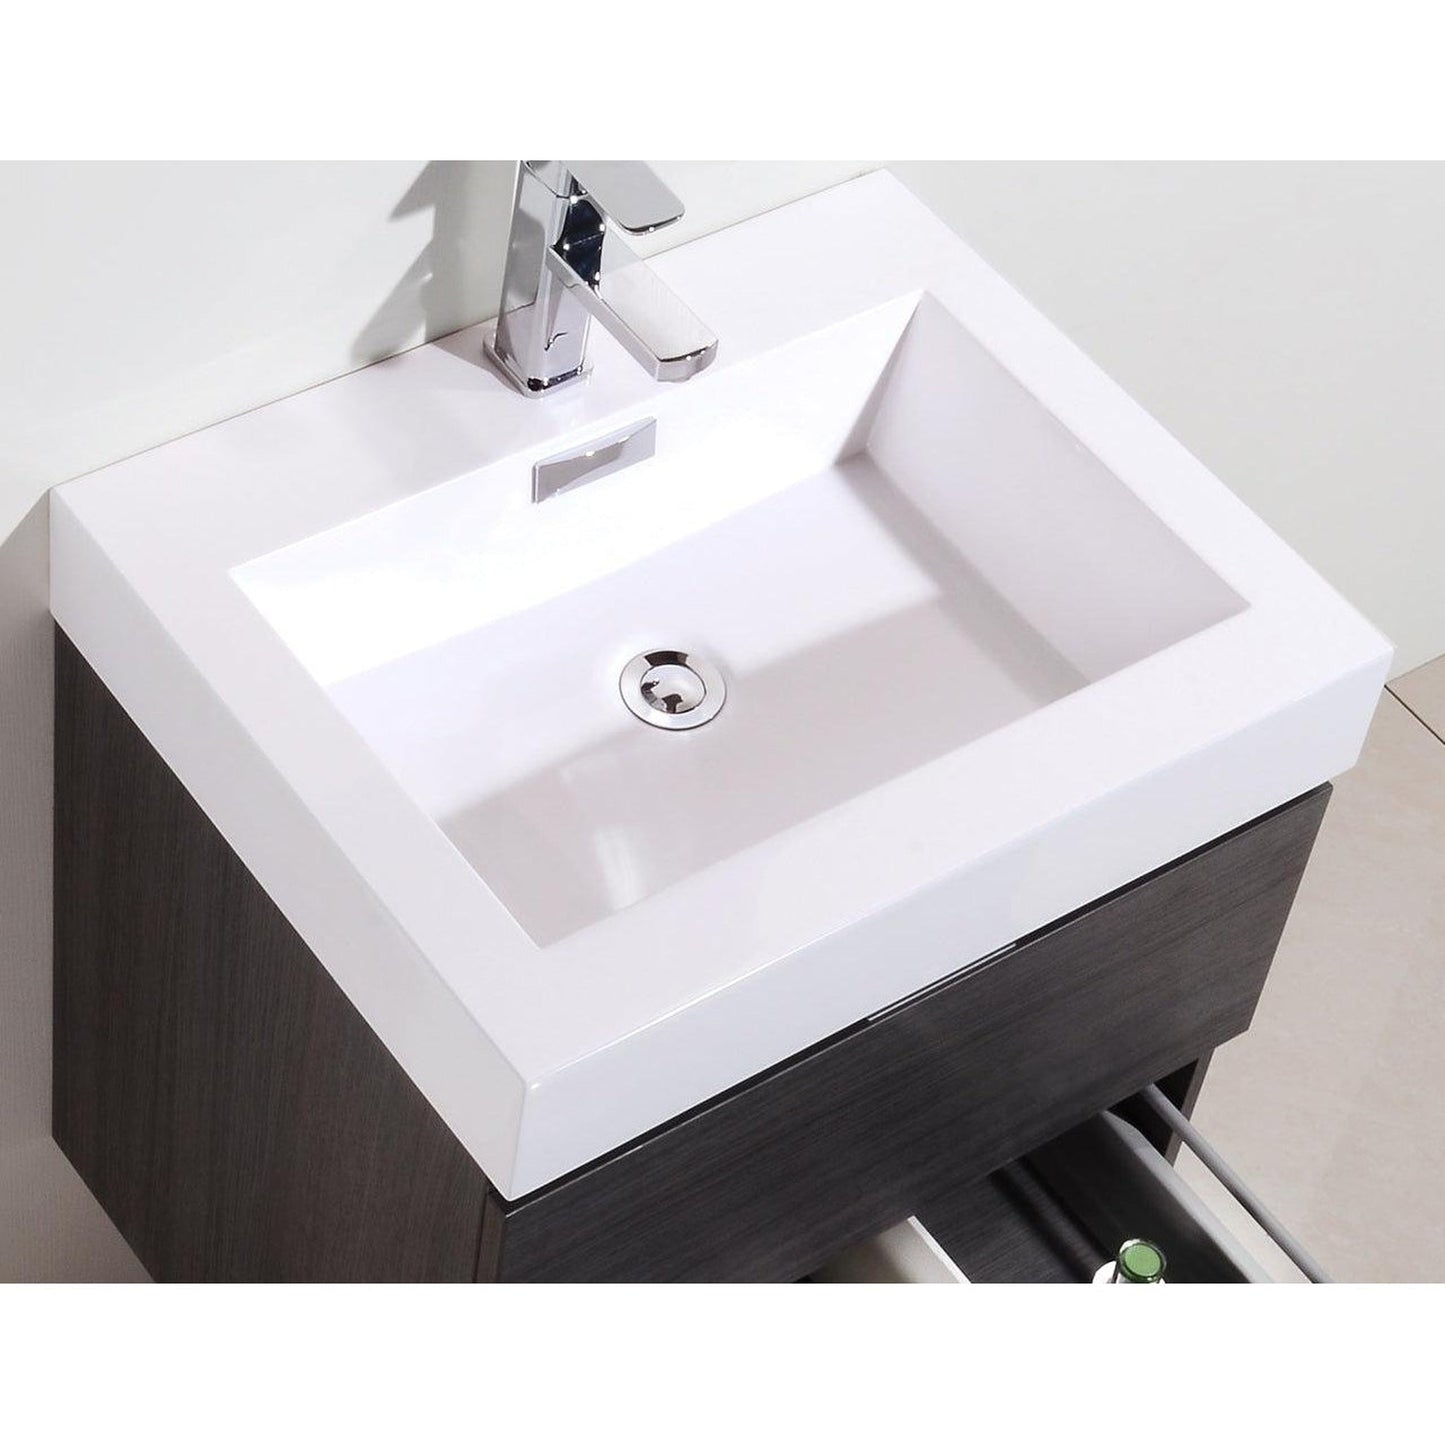 KubeBath Bliss 24" Gray Oak Wall-Mounted Modern Bathroom Vanity With Single Integrated Acrylic Sink With Overflow